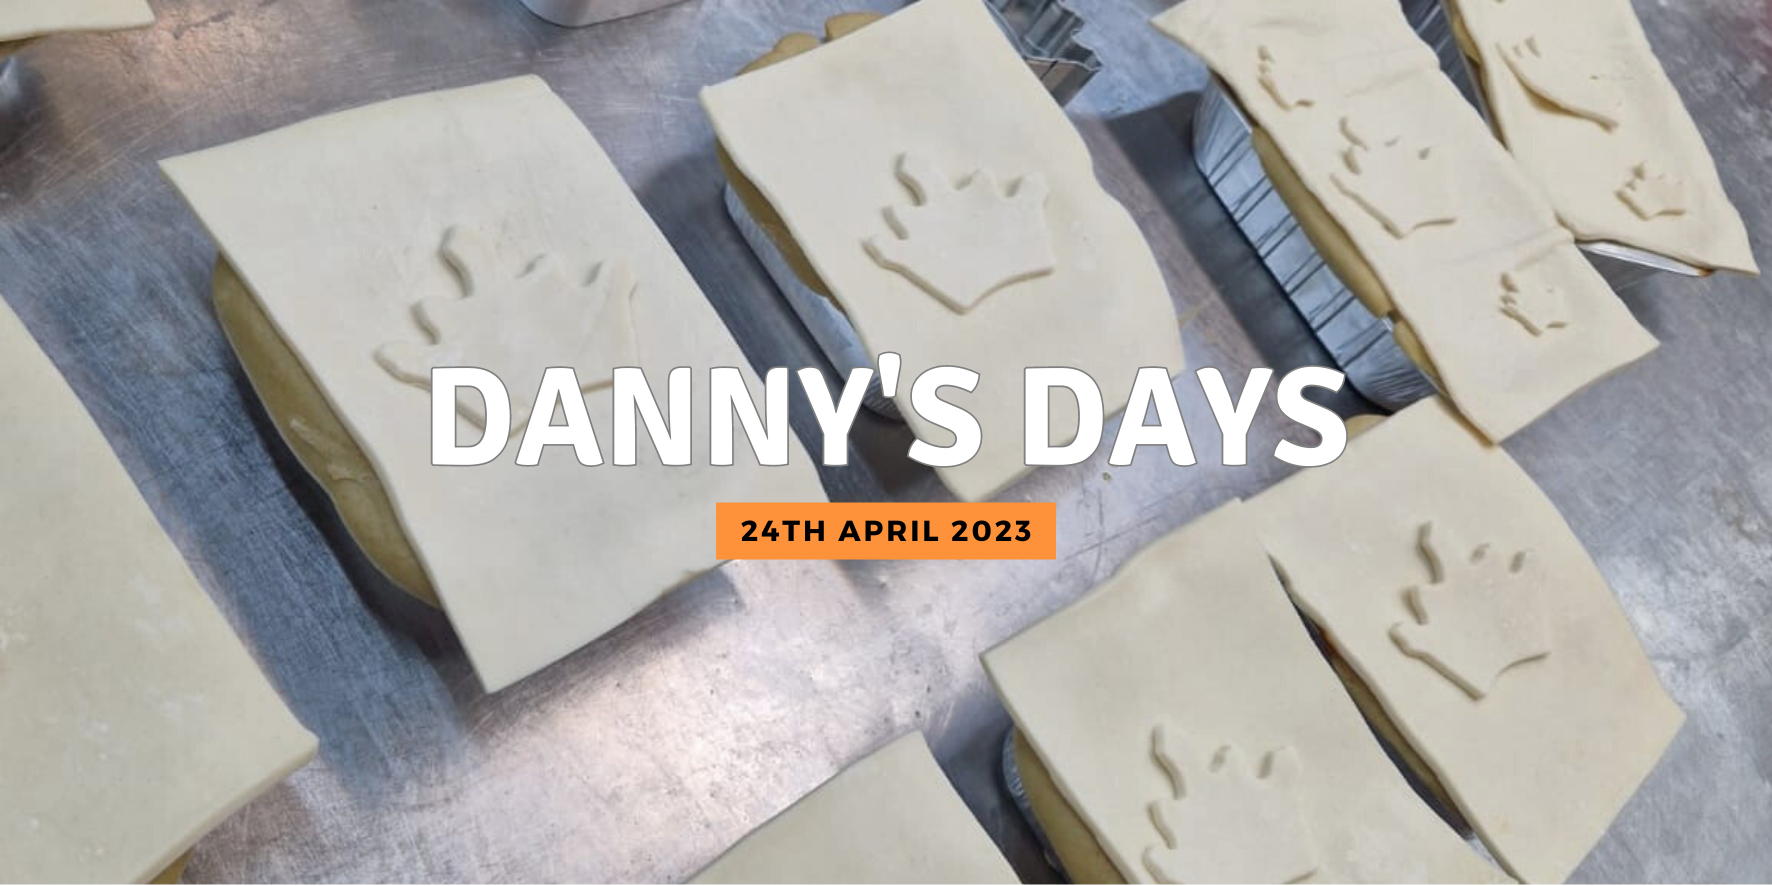 Danny's Days - 24th April 2023